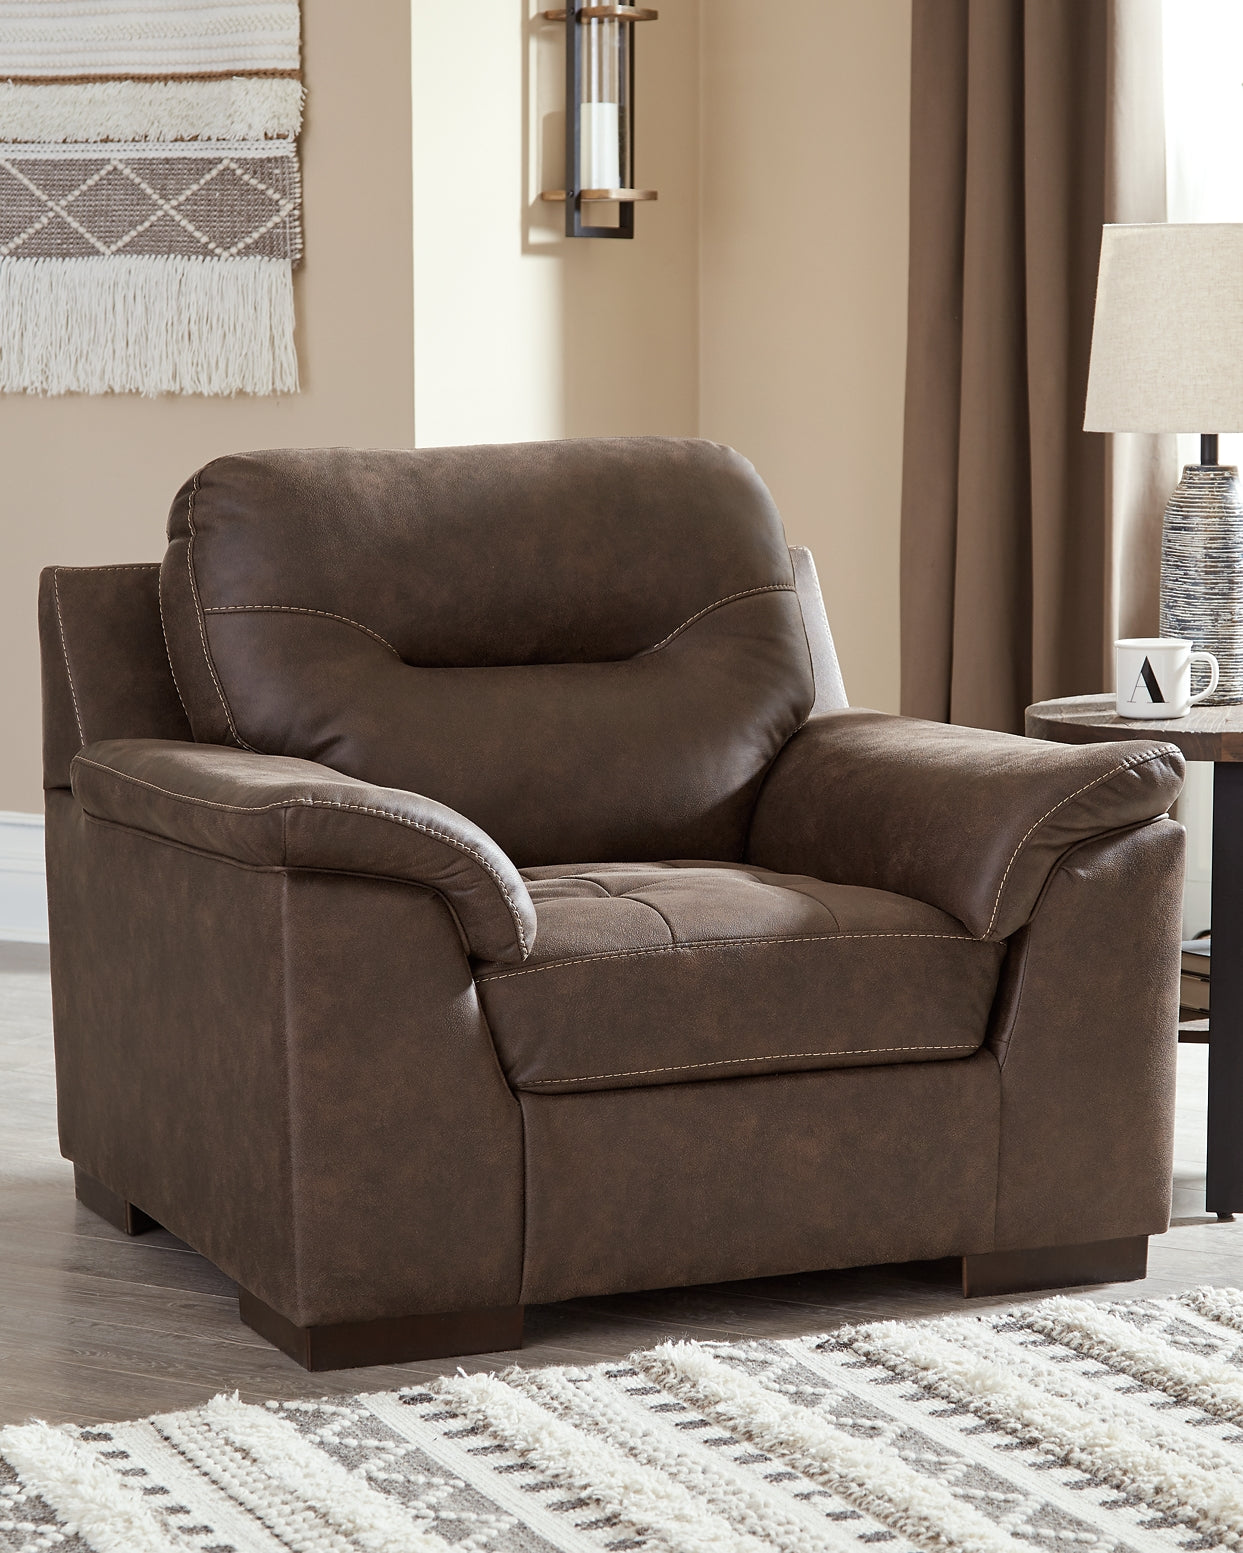 Maderla Chair at Cloud 9 Mattress & Furniture furniture, home furnishing, home decor